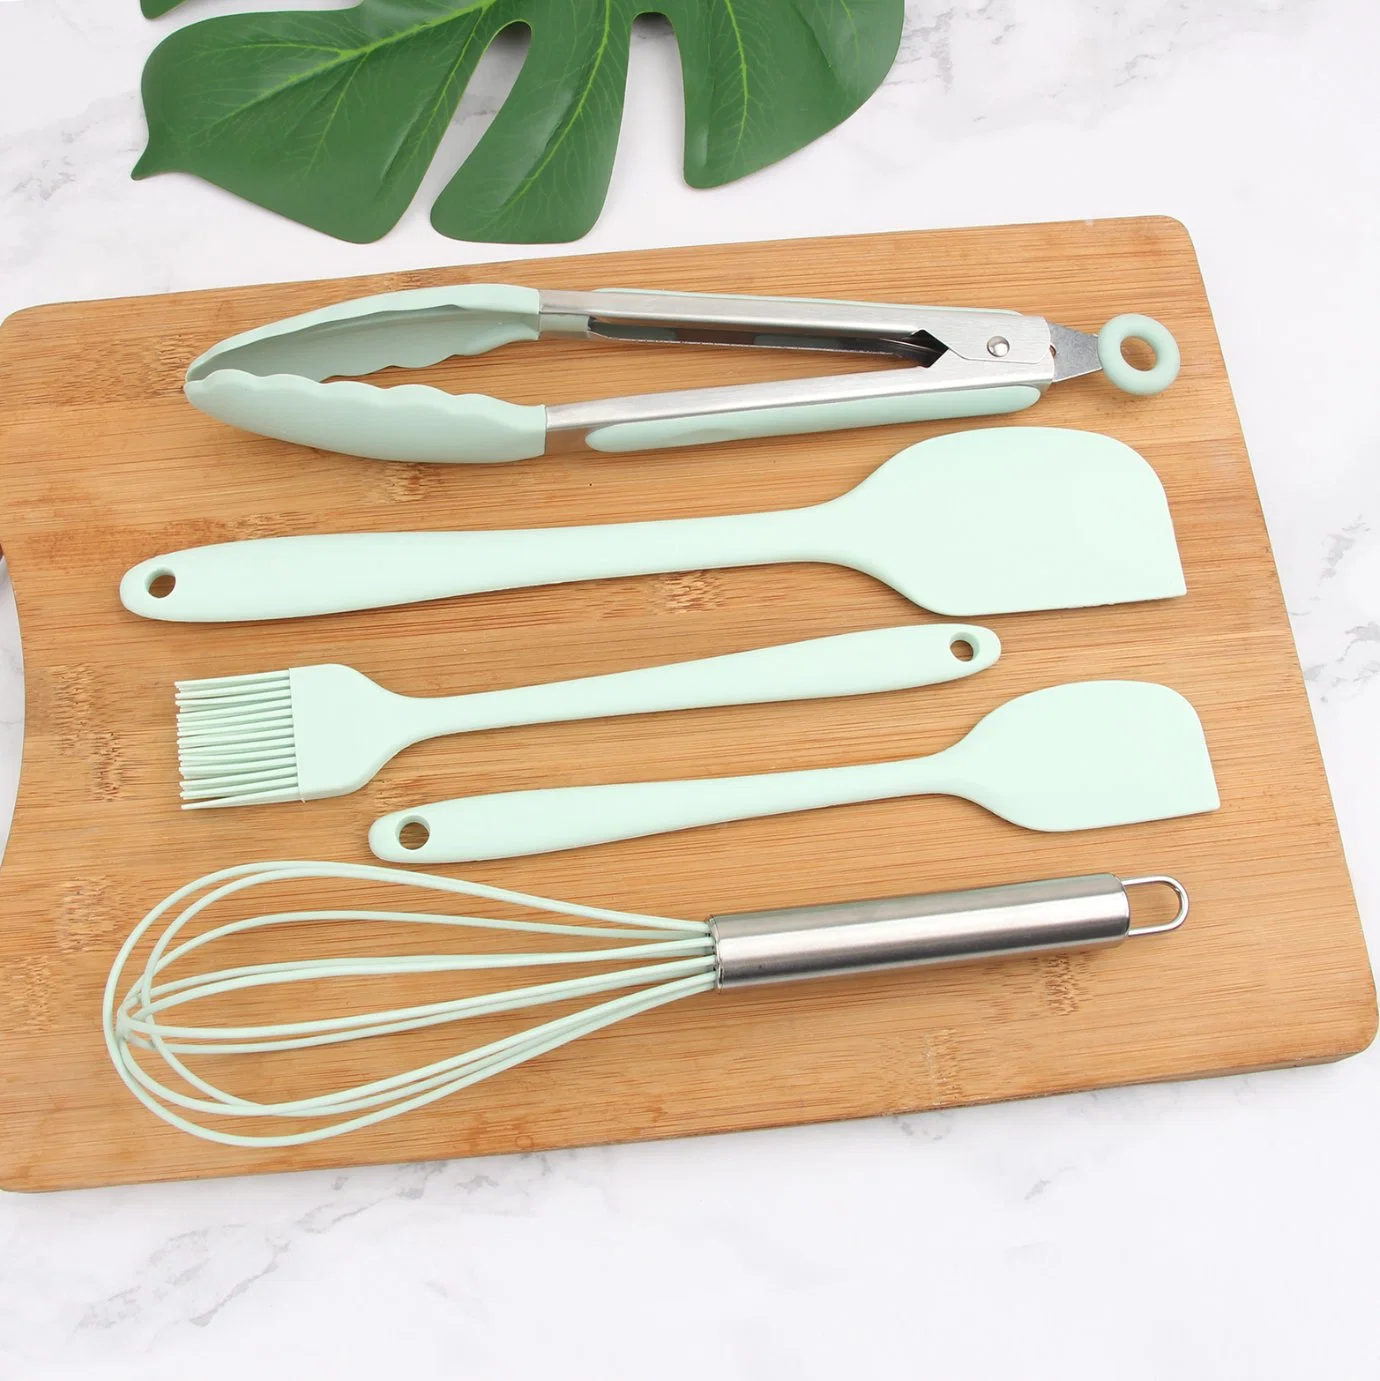 Hot Sale Food Grade Kitchenware Accessories Kitchen Cooking Tools Silicone Kitchen Utensils Set